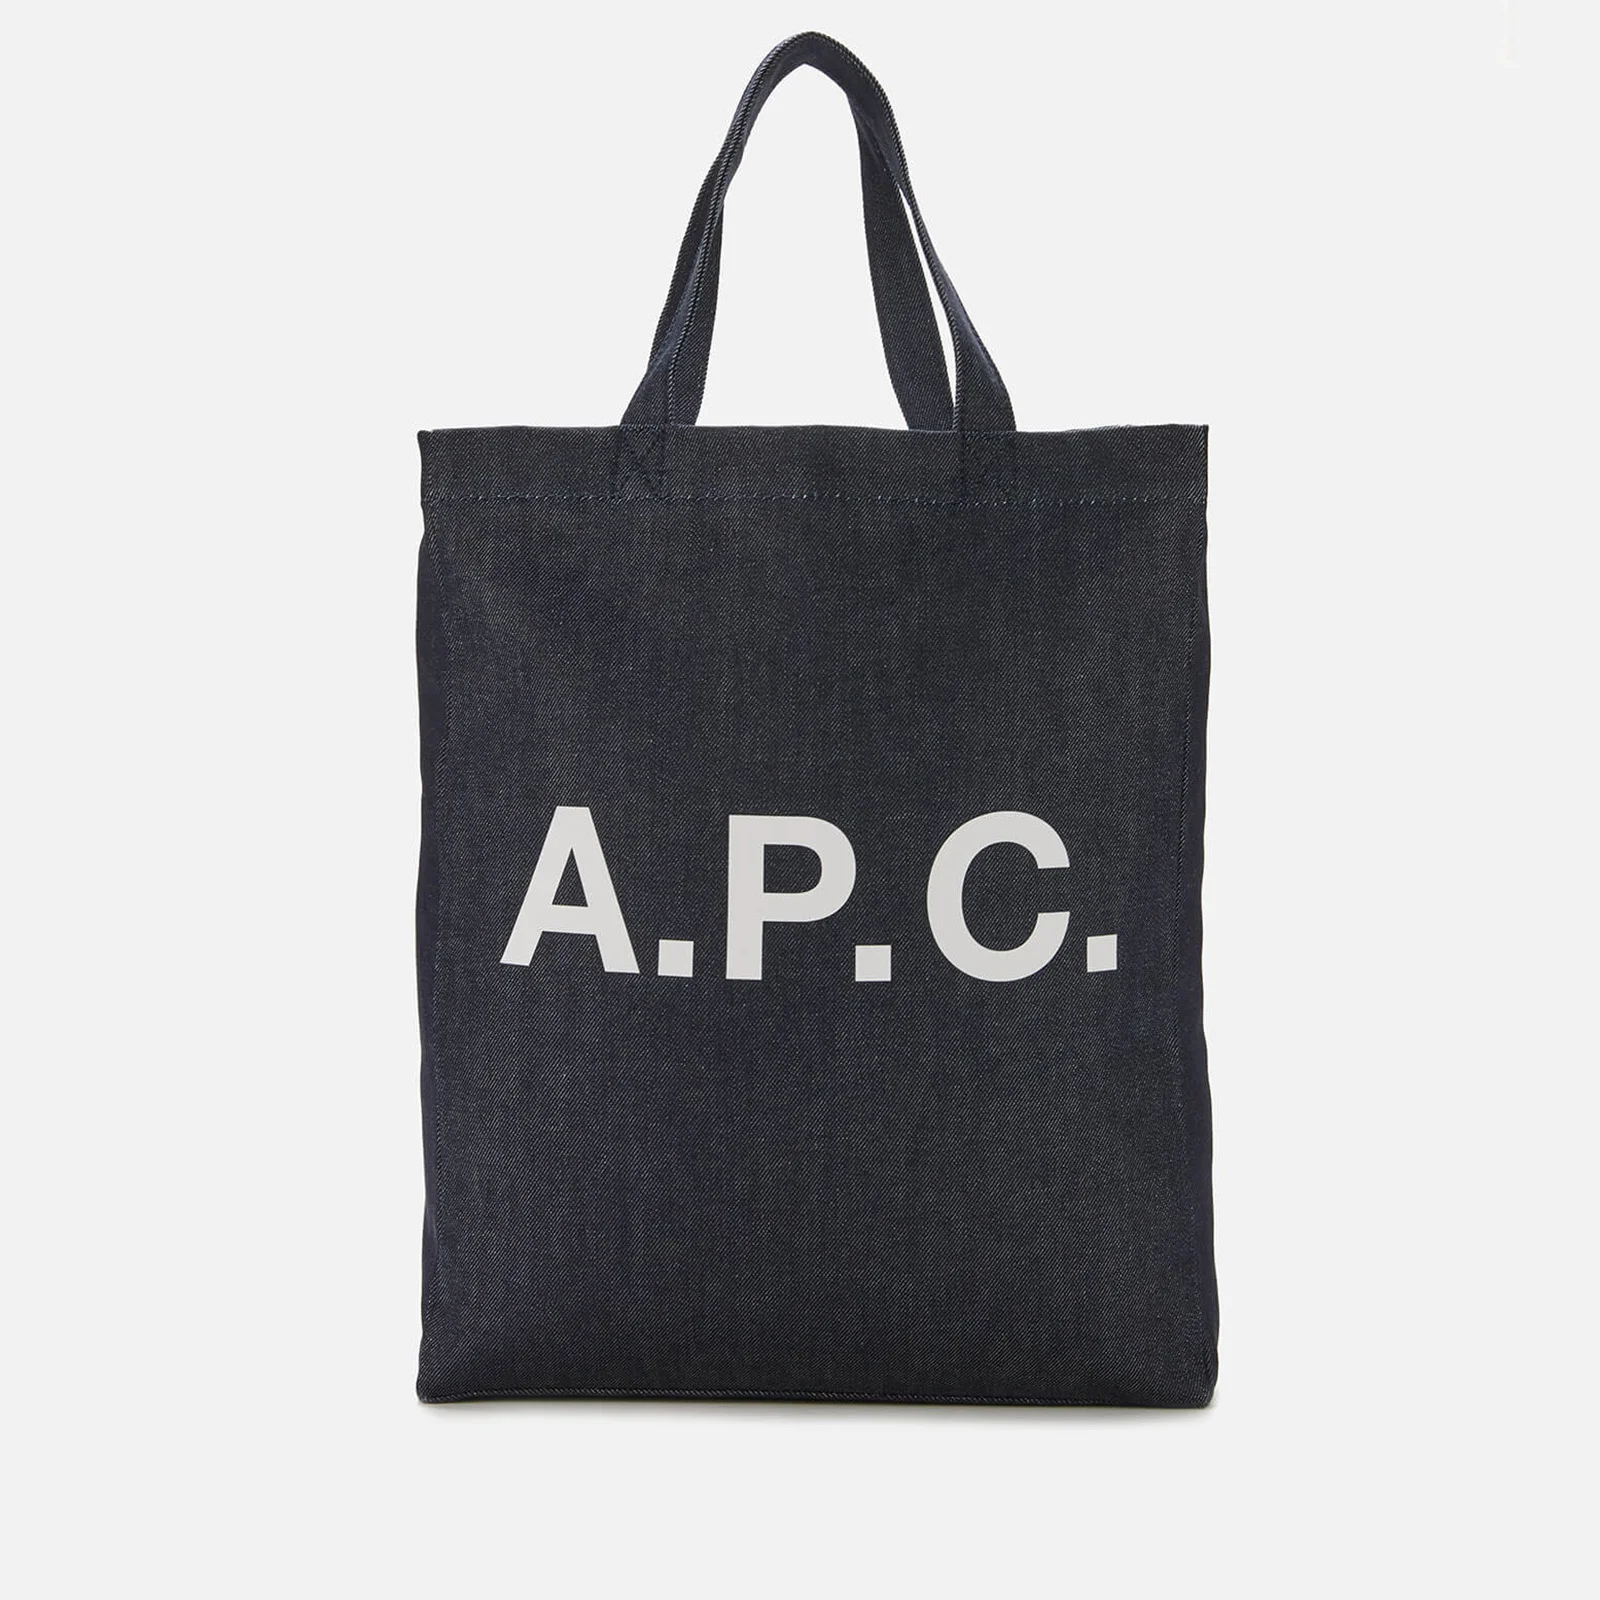 A.P.C. Men's Lou Tote Bag - Indigo Image 1